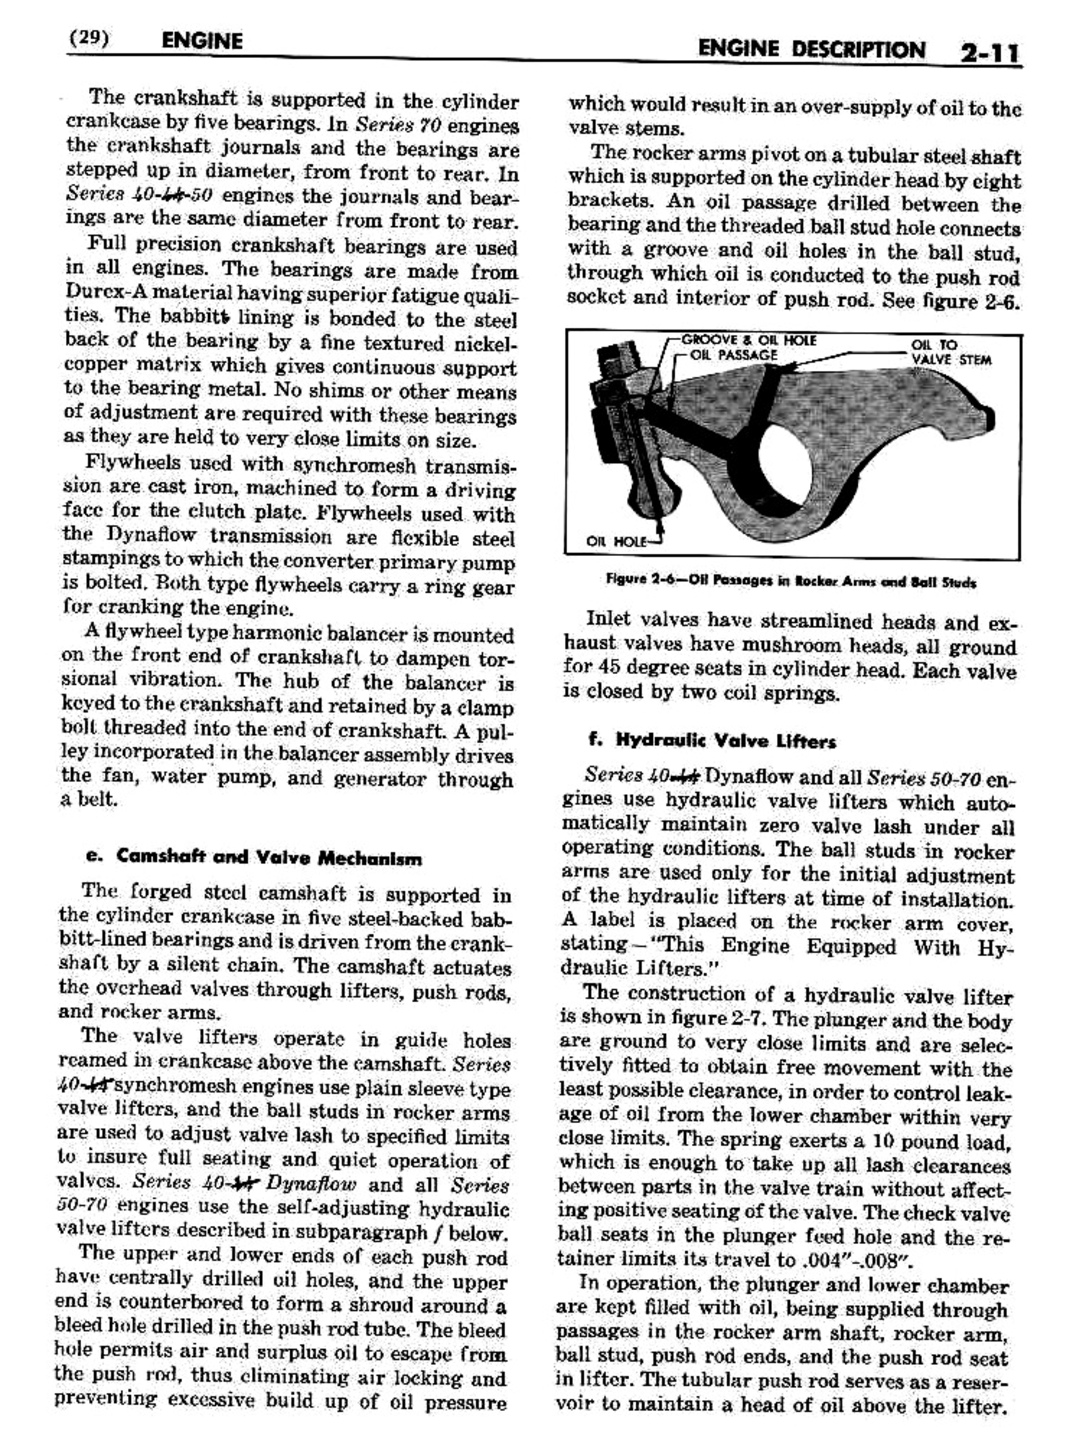 n_03 1951 Buick Shop Manual - Engine-011-011.jpg